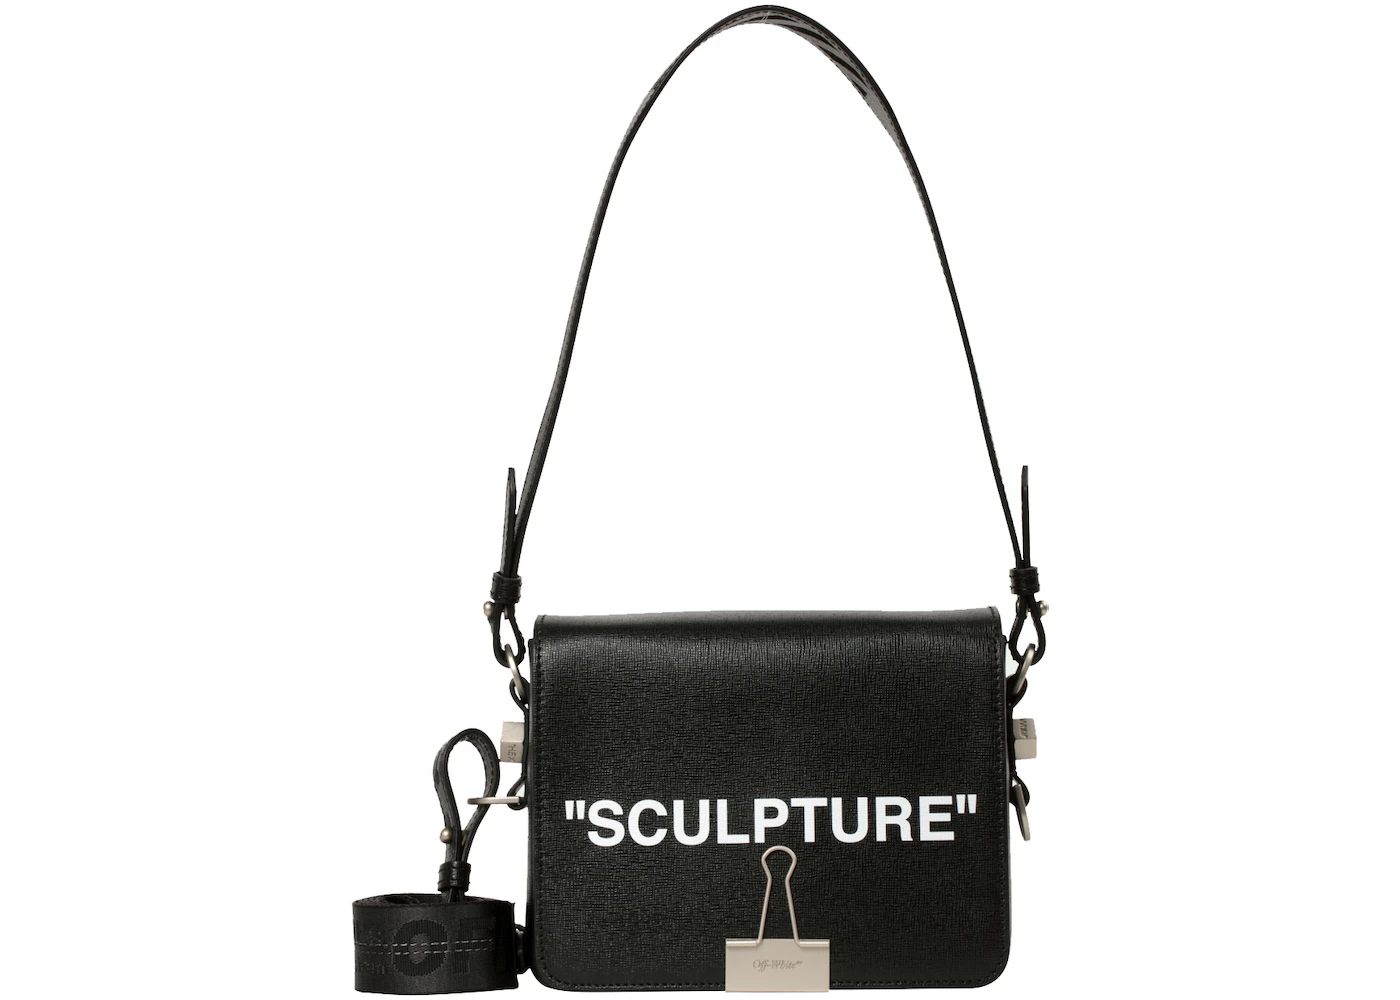 OFF-WHITE Binder Clip Bag Sculpture Black White in Saffiano Leather ...